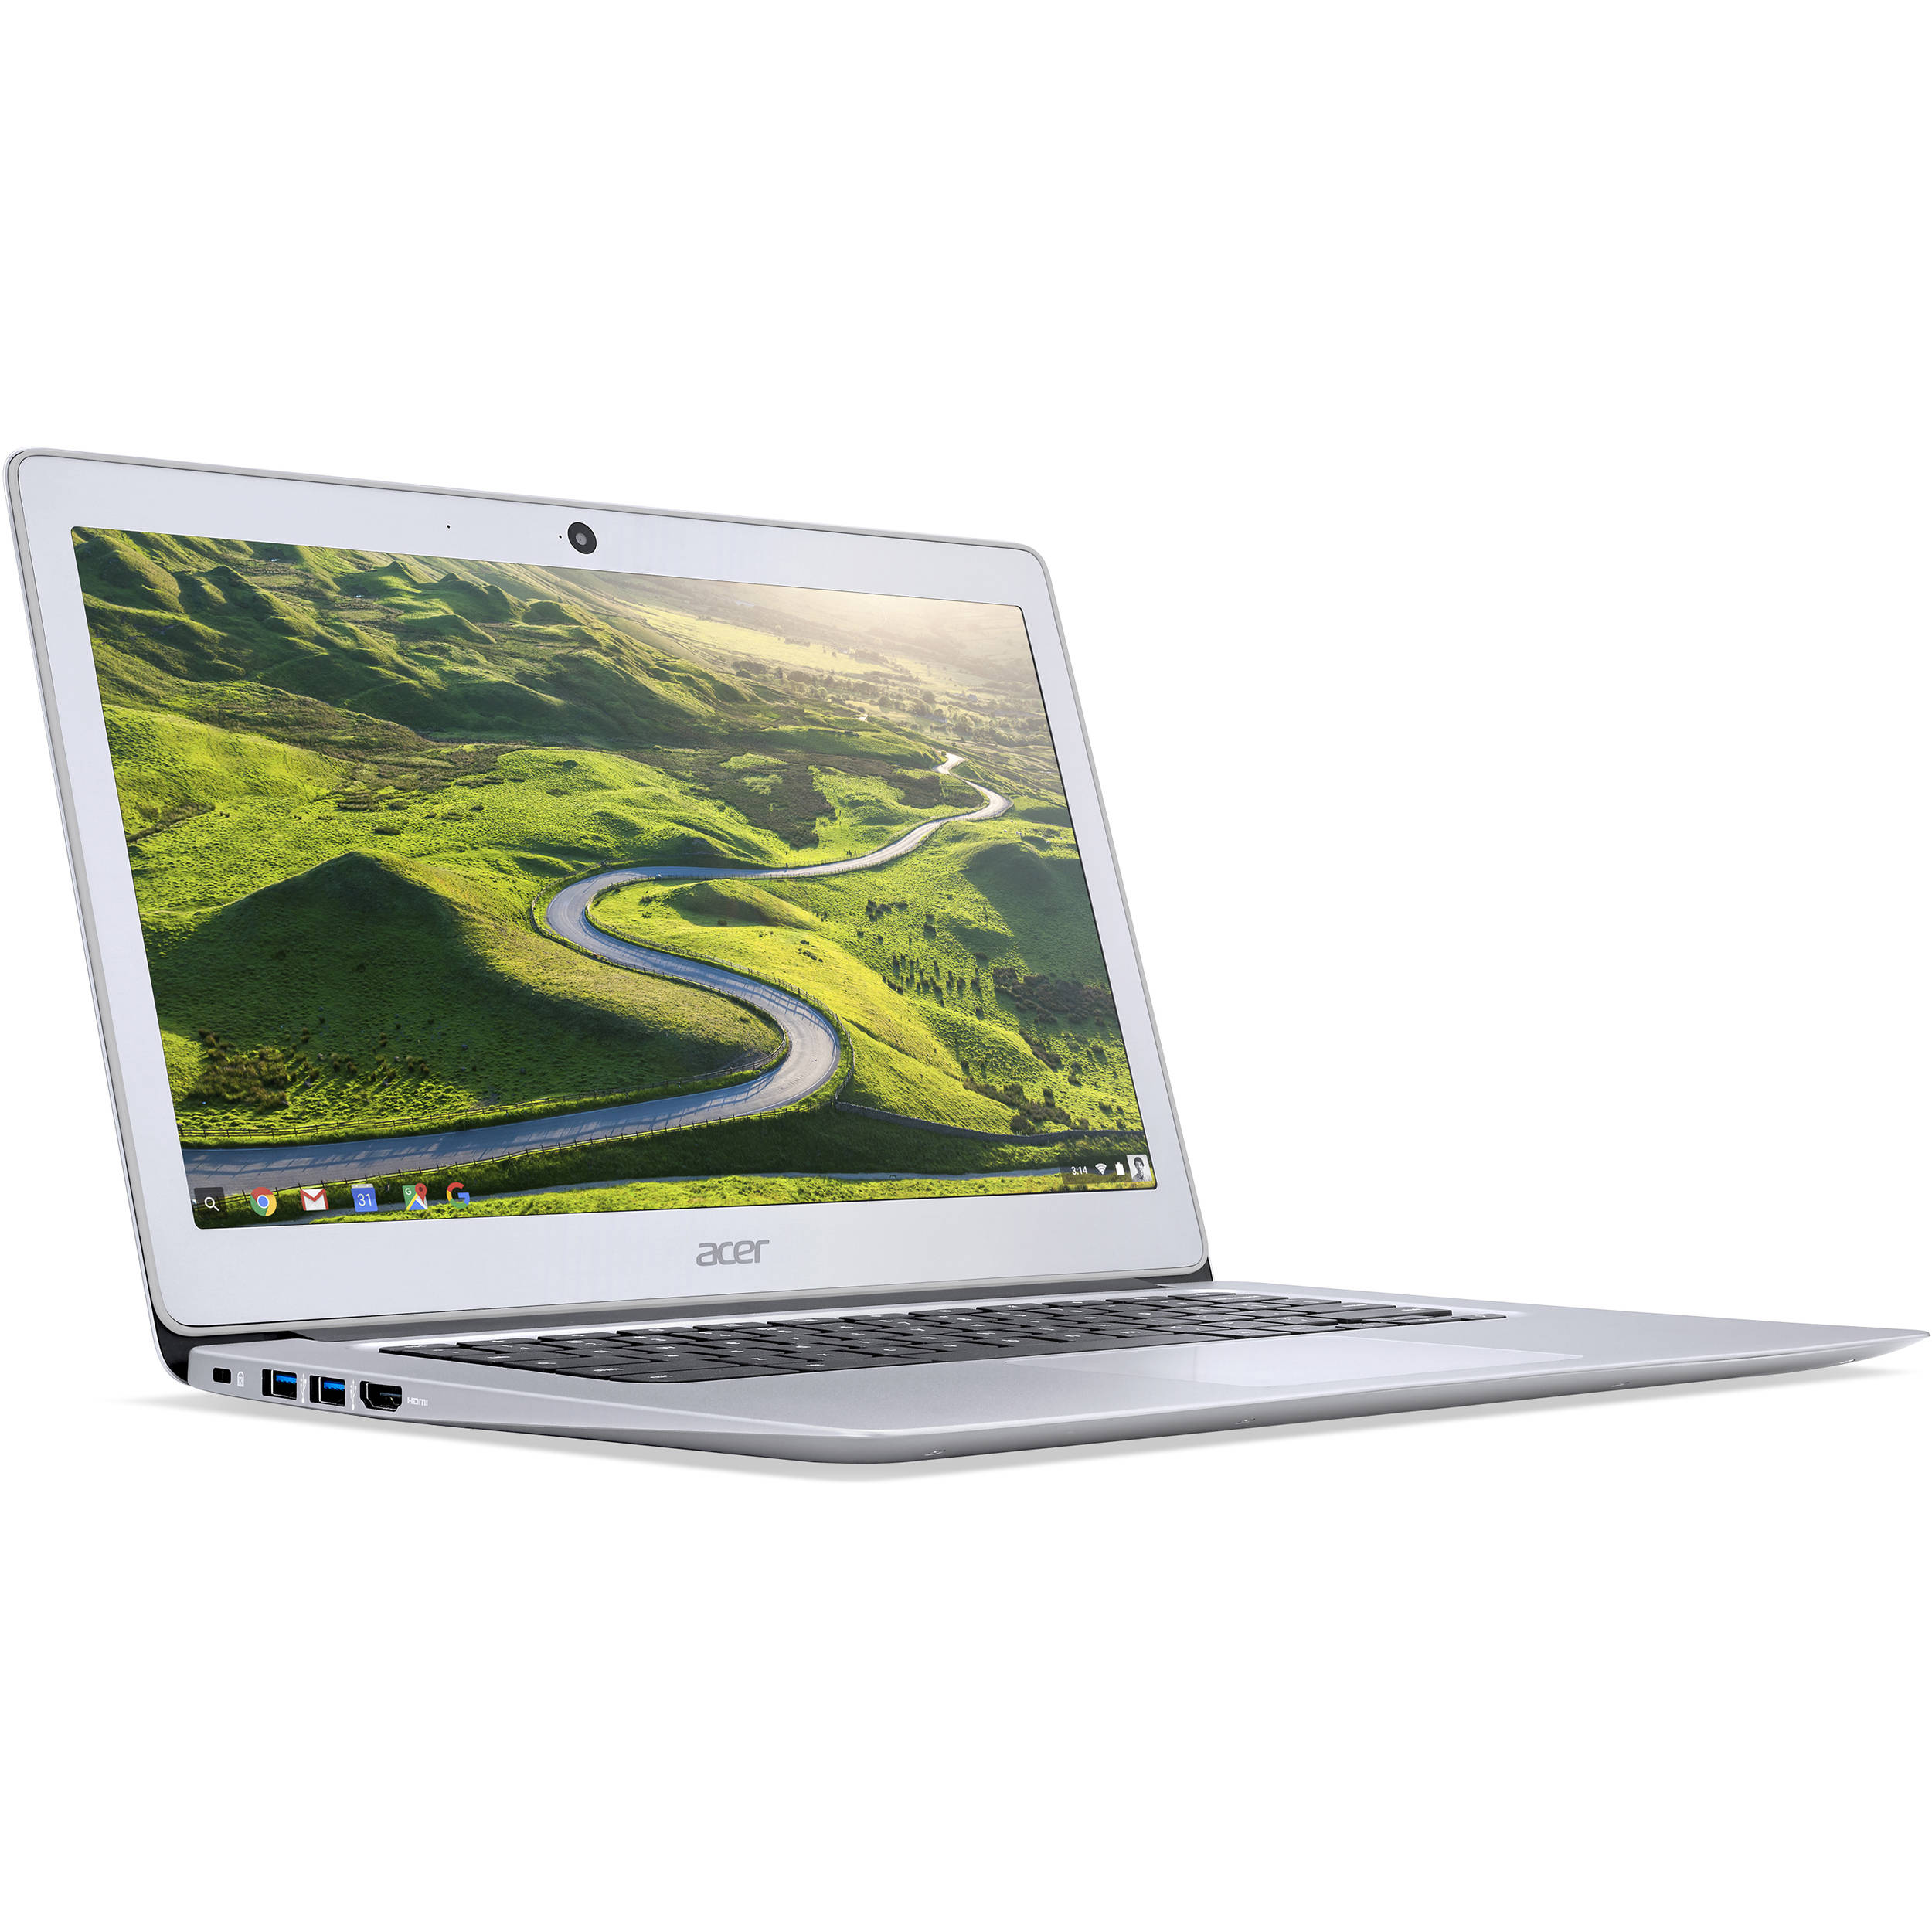 Acer 14 16gb Chromebook 14 Nx Gc2aa 016 B H Photo Video